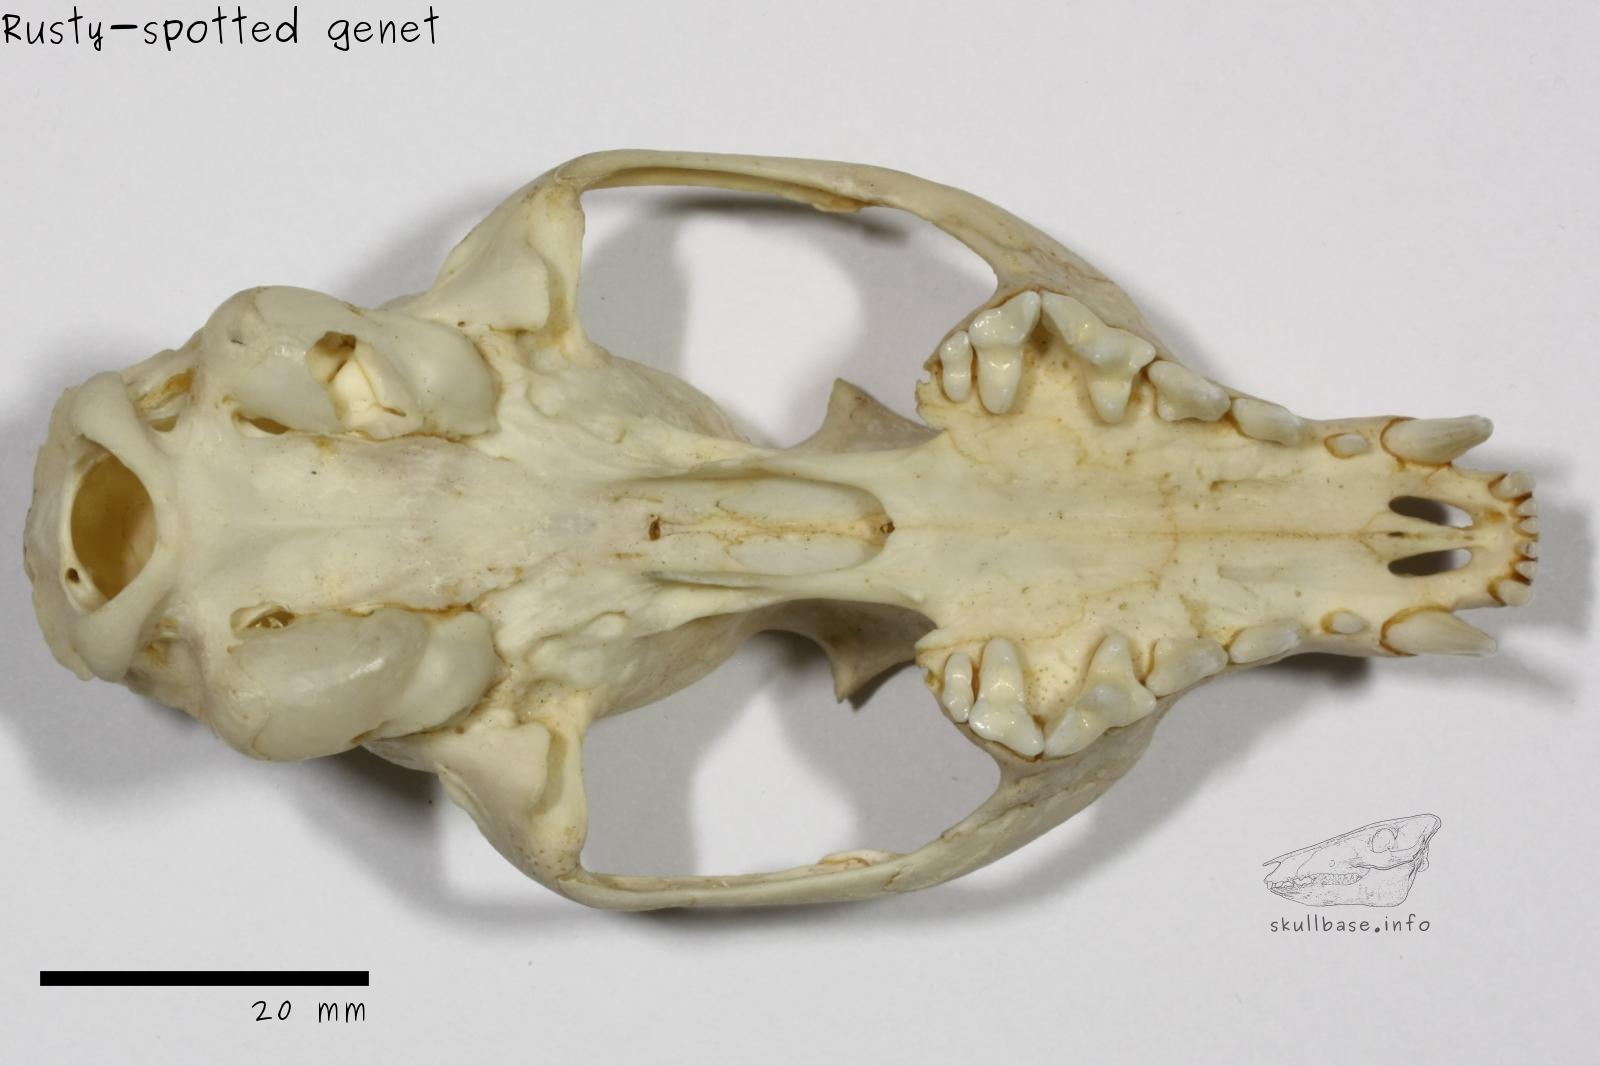 Rusty-spotted genet (Genetta maculata) skull ventral view